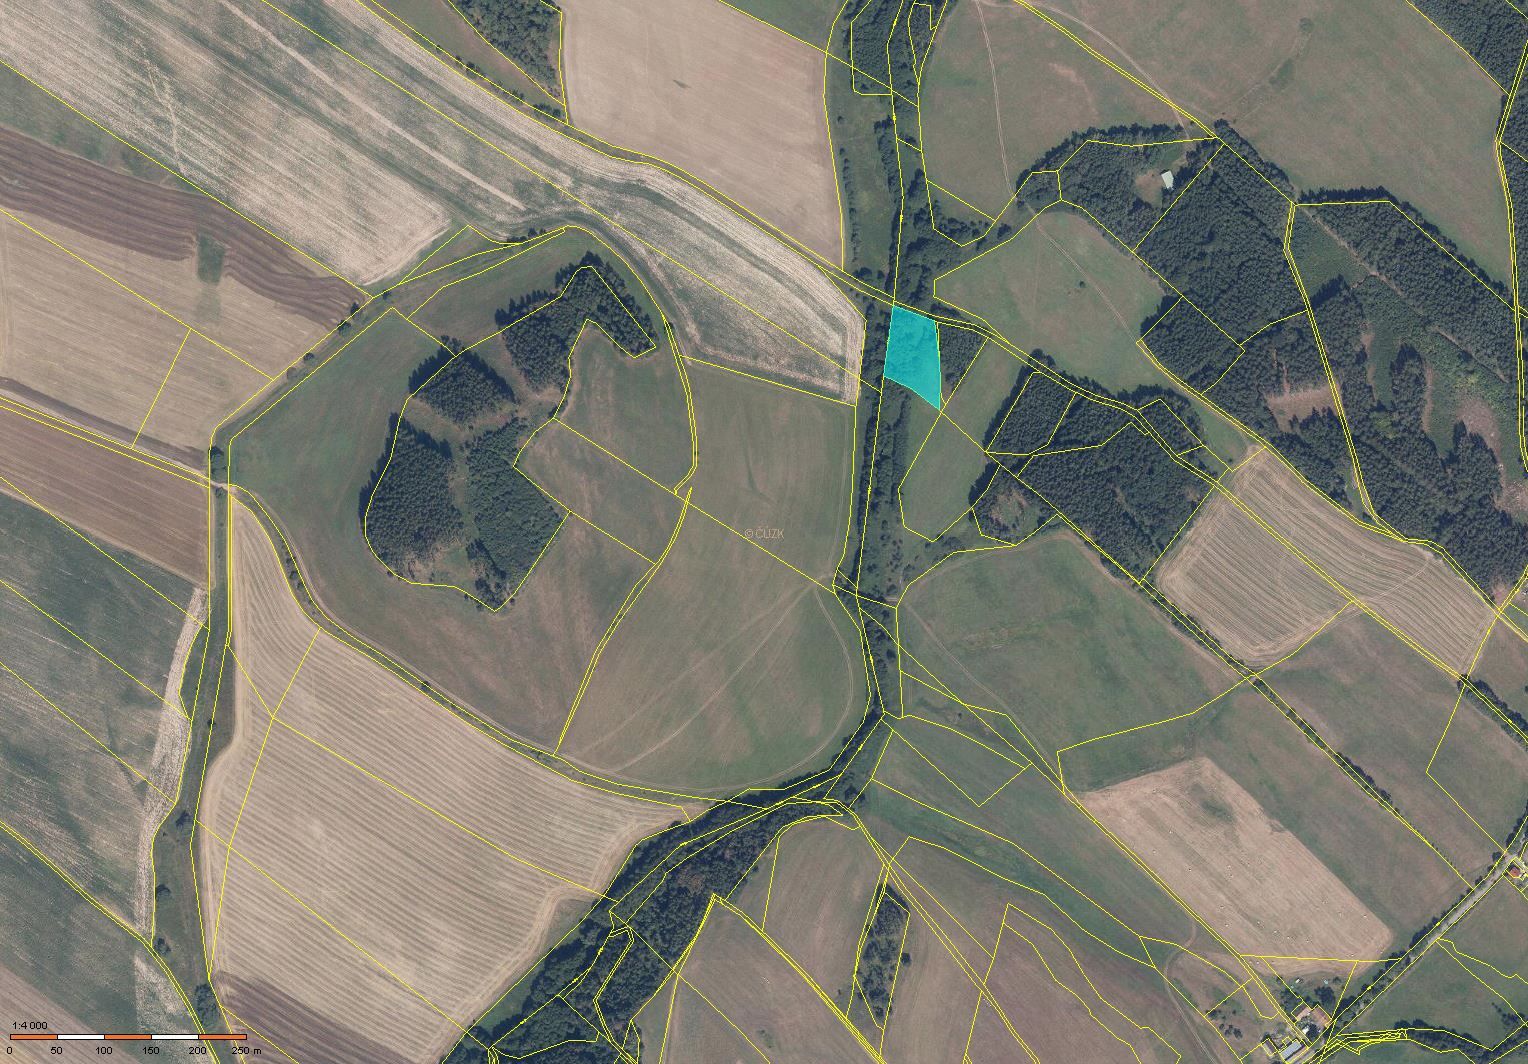 Prodej 0,452 ha půdy v k.ú. Benešov u Broumova, obrázek č. 1